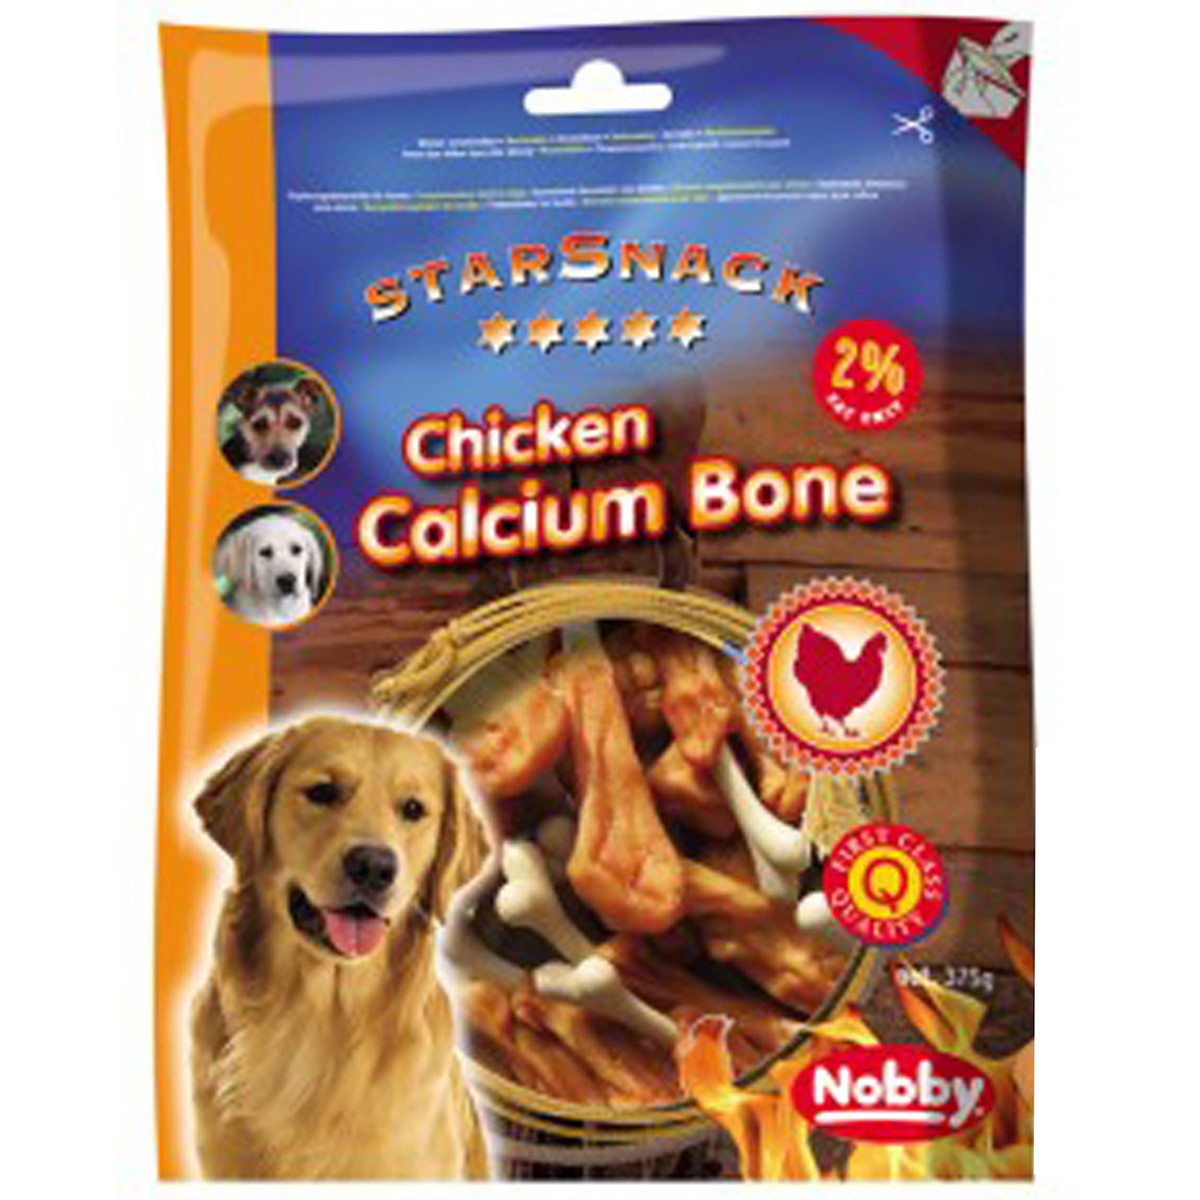   Barbecue Chicken Calcium Bone, 375 g  375 g